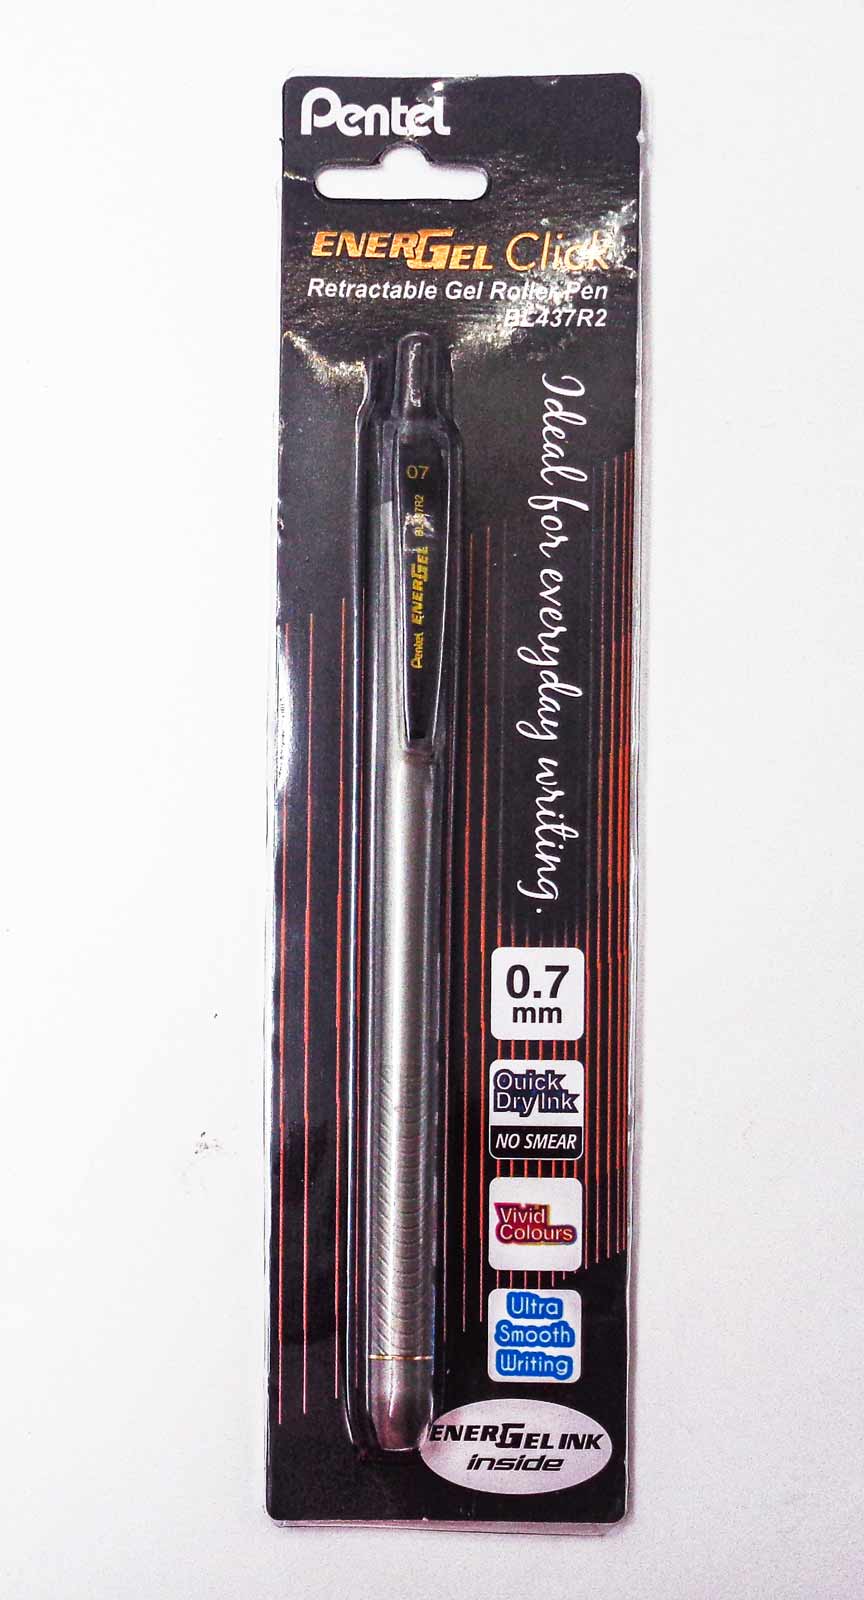 Pentel  BL 437 R2 Energel Click 0.7mm Grey Body Retractable Gel Roller Pen  SKU 24972